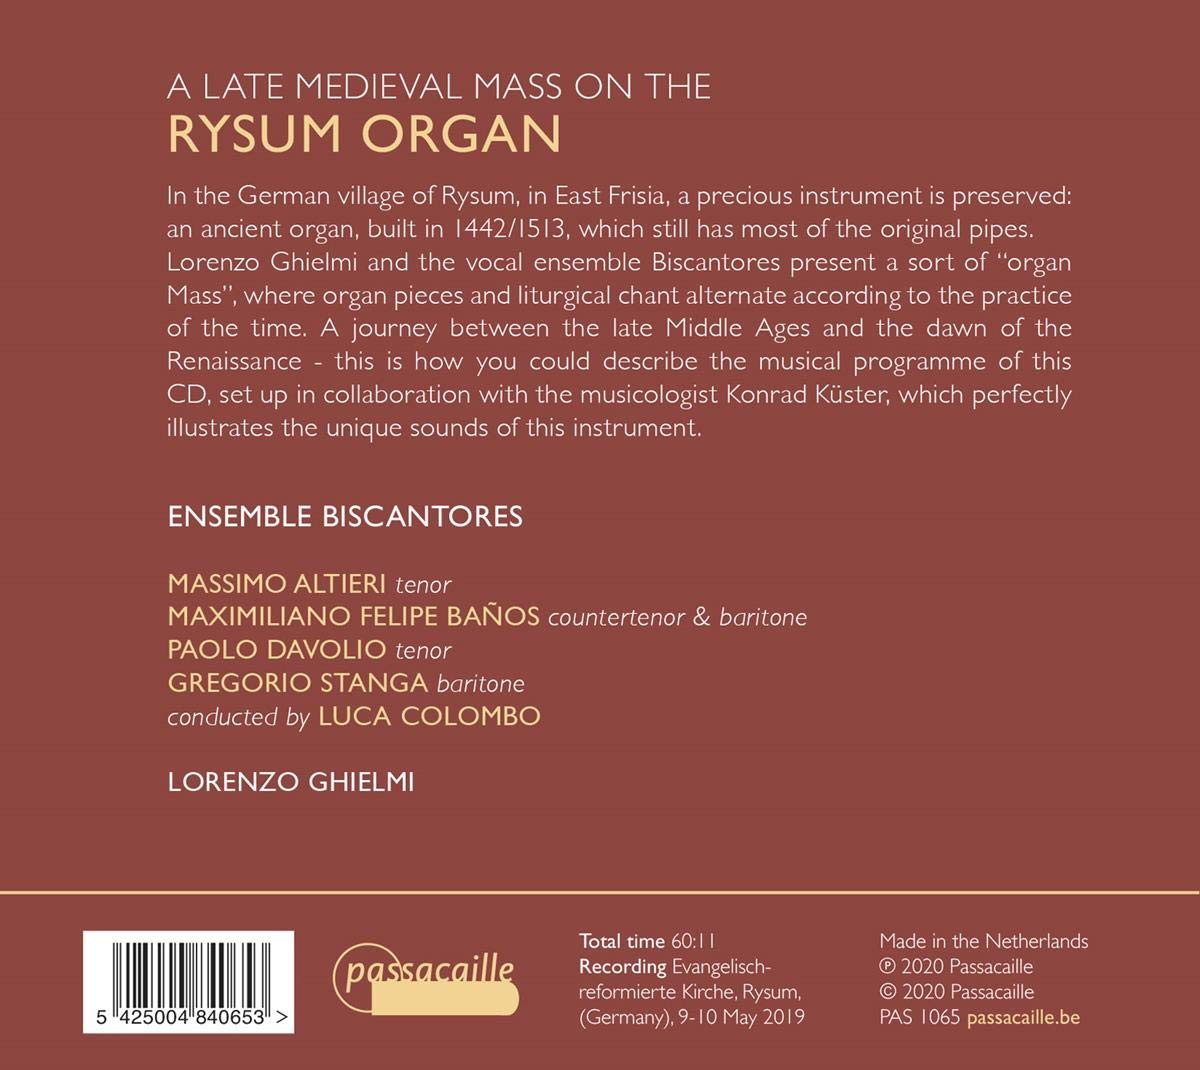 Lorenzo Ghielmi 리줌 오르간과 함께 연주하는 후기 중세 미사곡 (A Late Medieval Mass On the Rysum Organ)